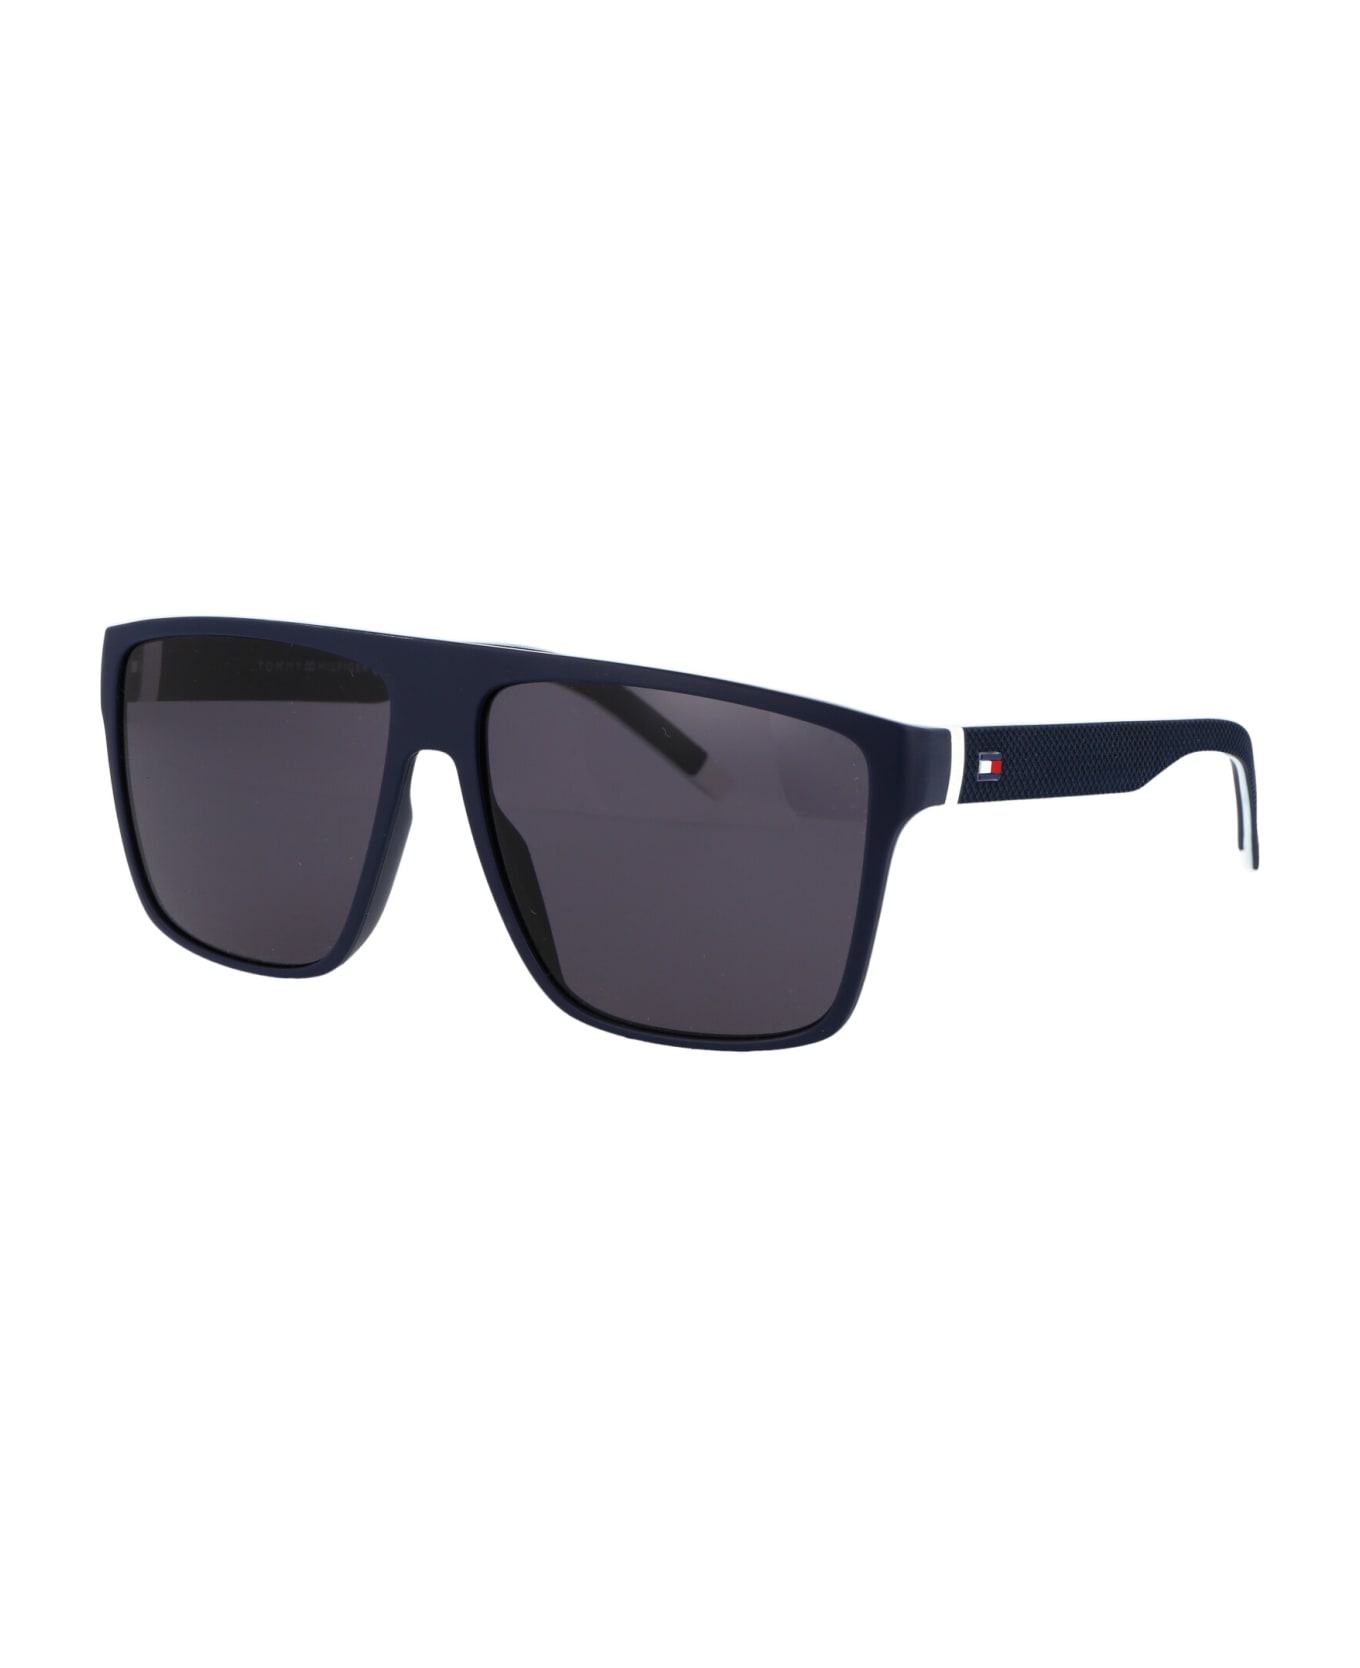 Tommy Hilfiger Th 1717/s Sunglasses - 0JUIR BLUE サングラス